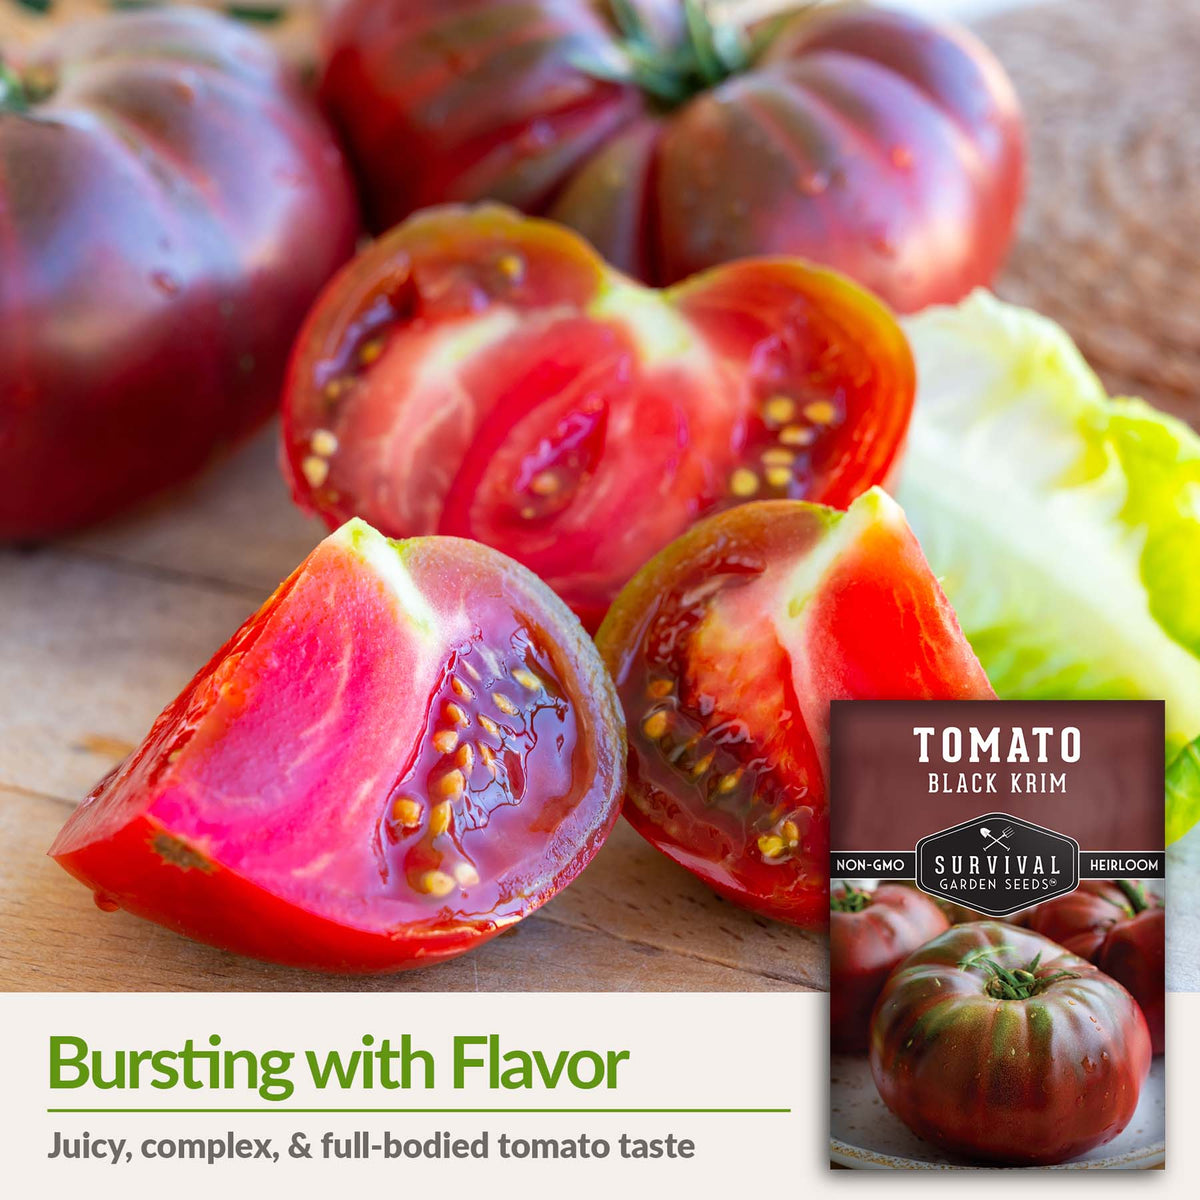 Black Krim tomatoes have a juicy full-bodied taste